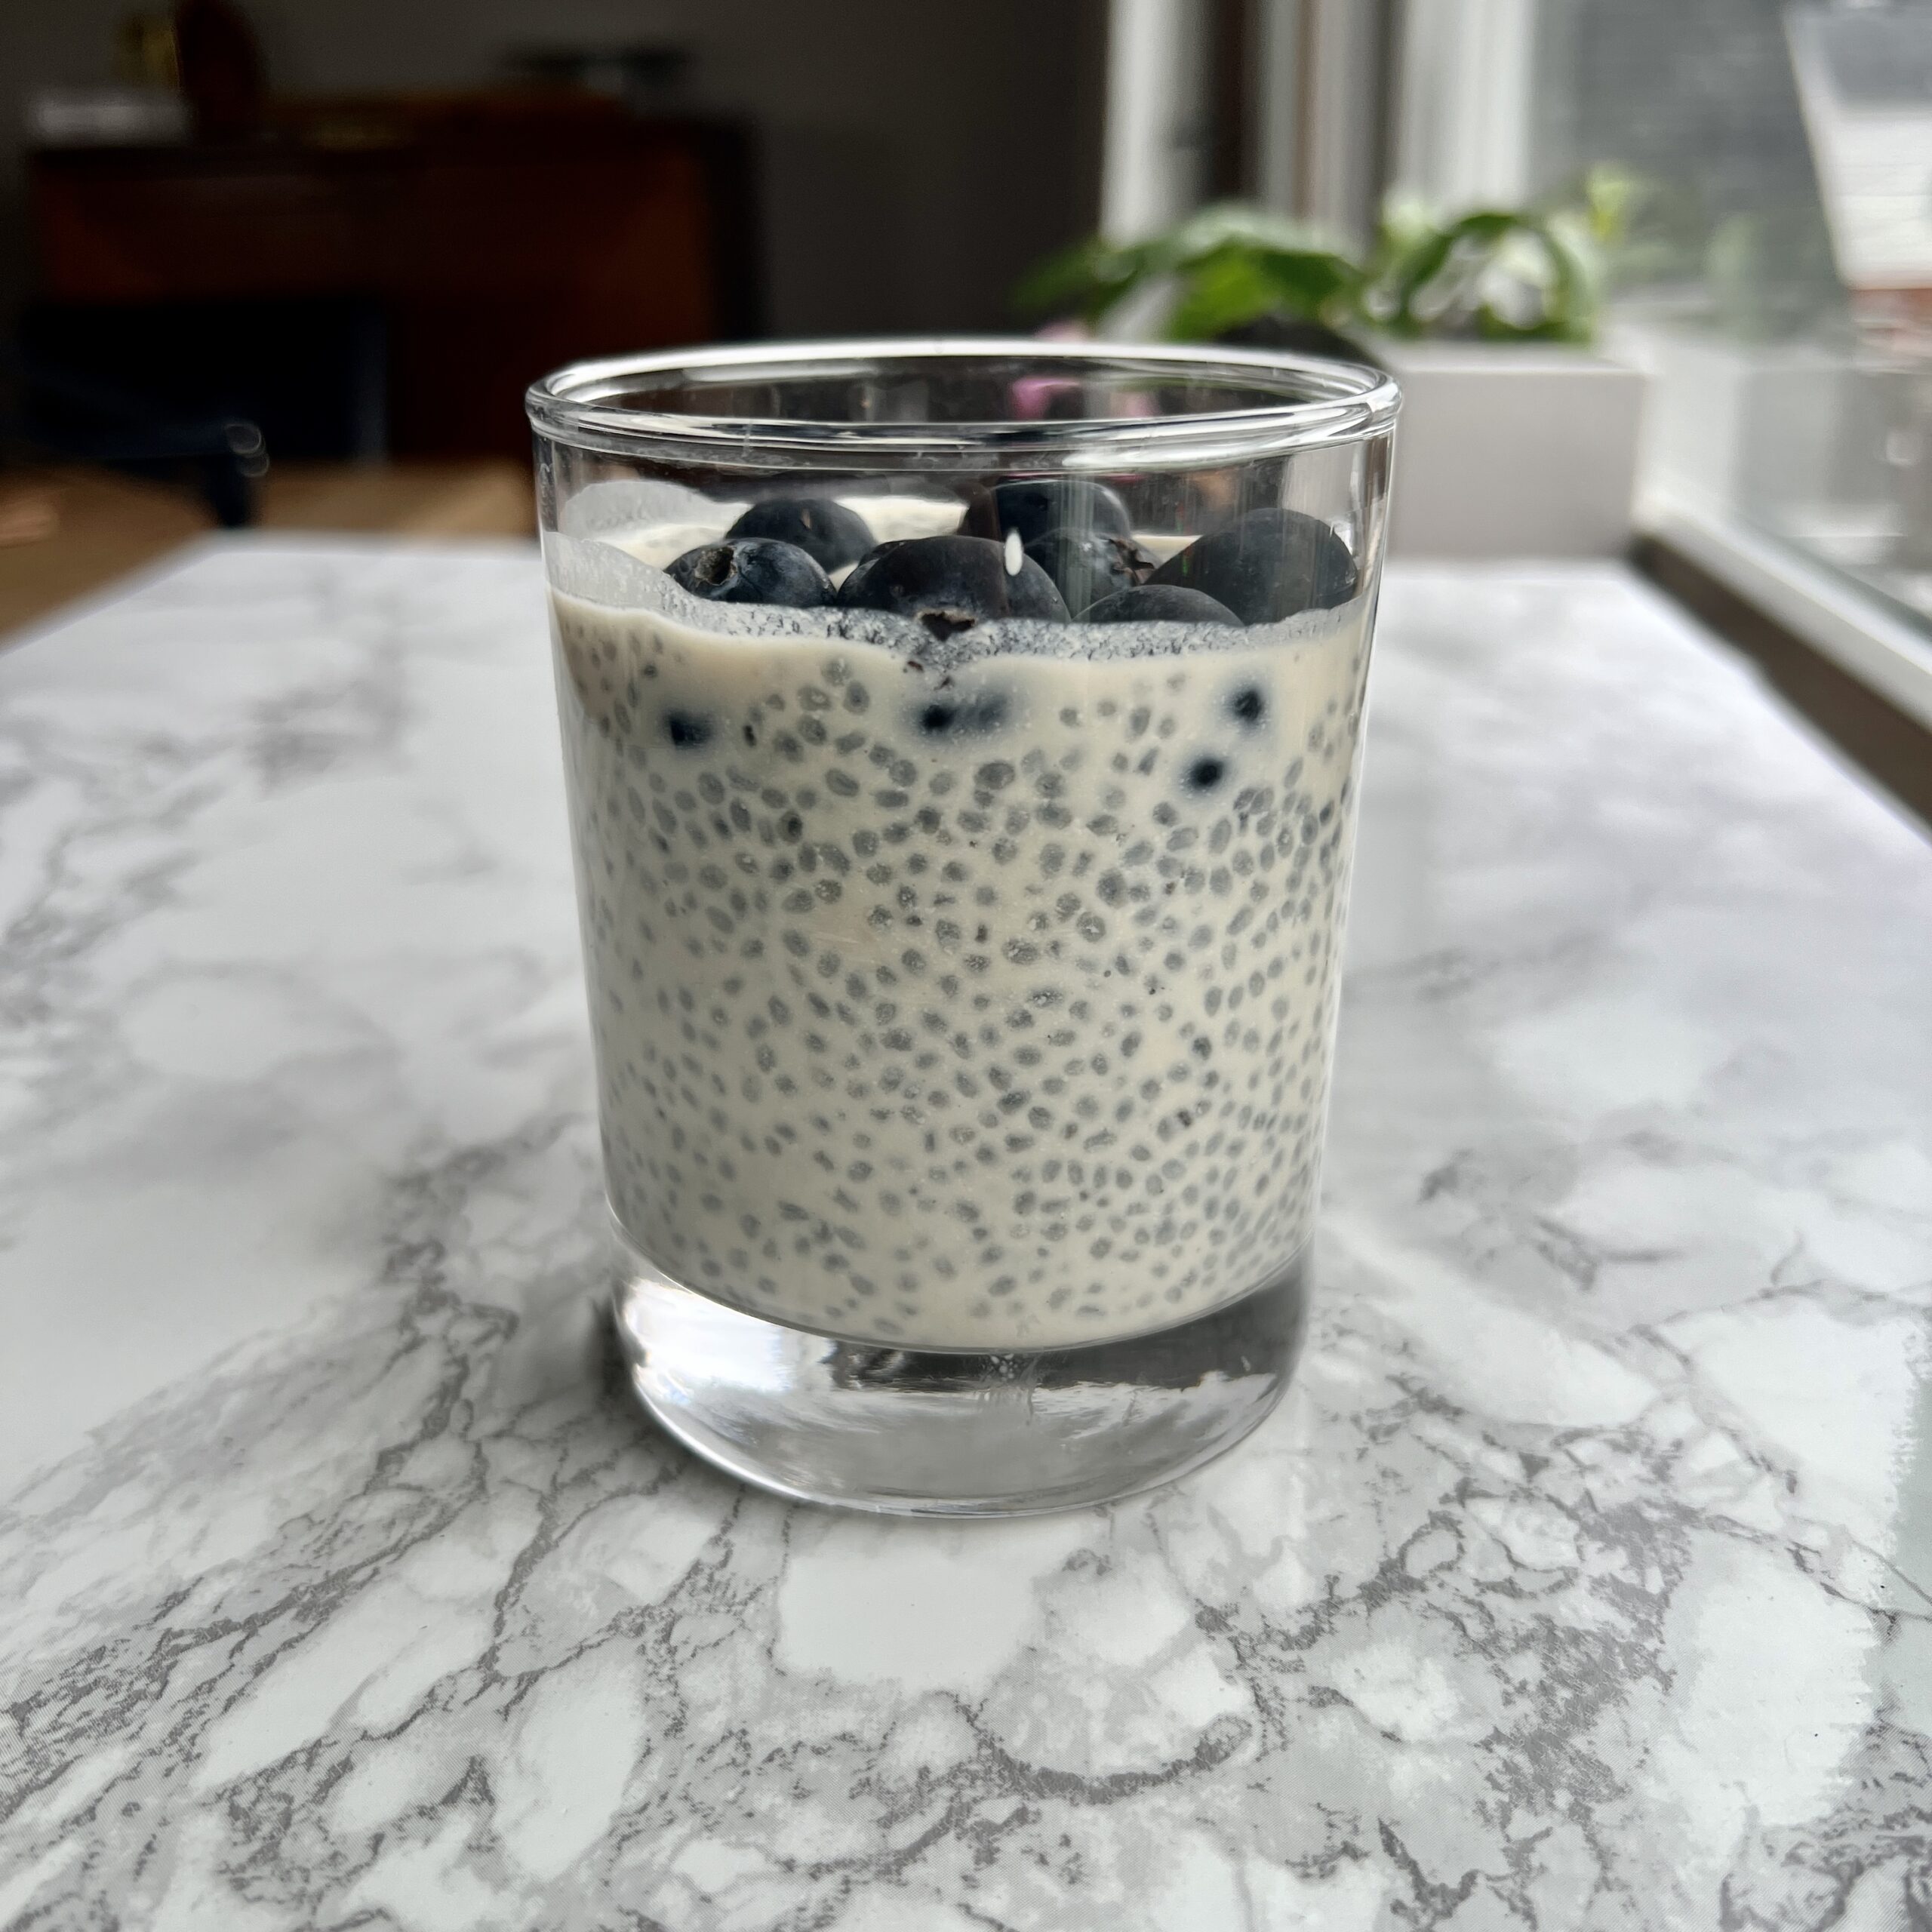 Zen Basil Breakfast With Blueberries